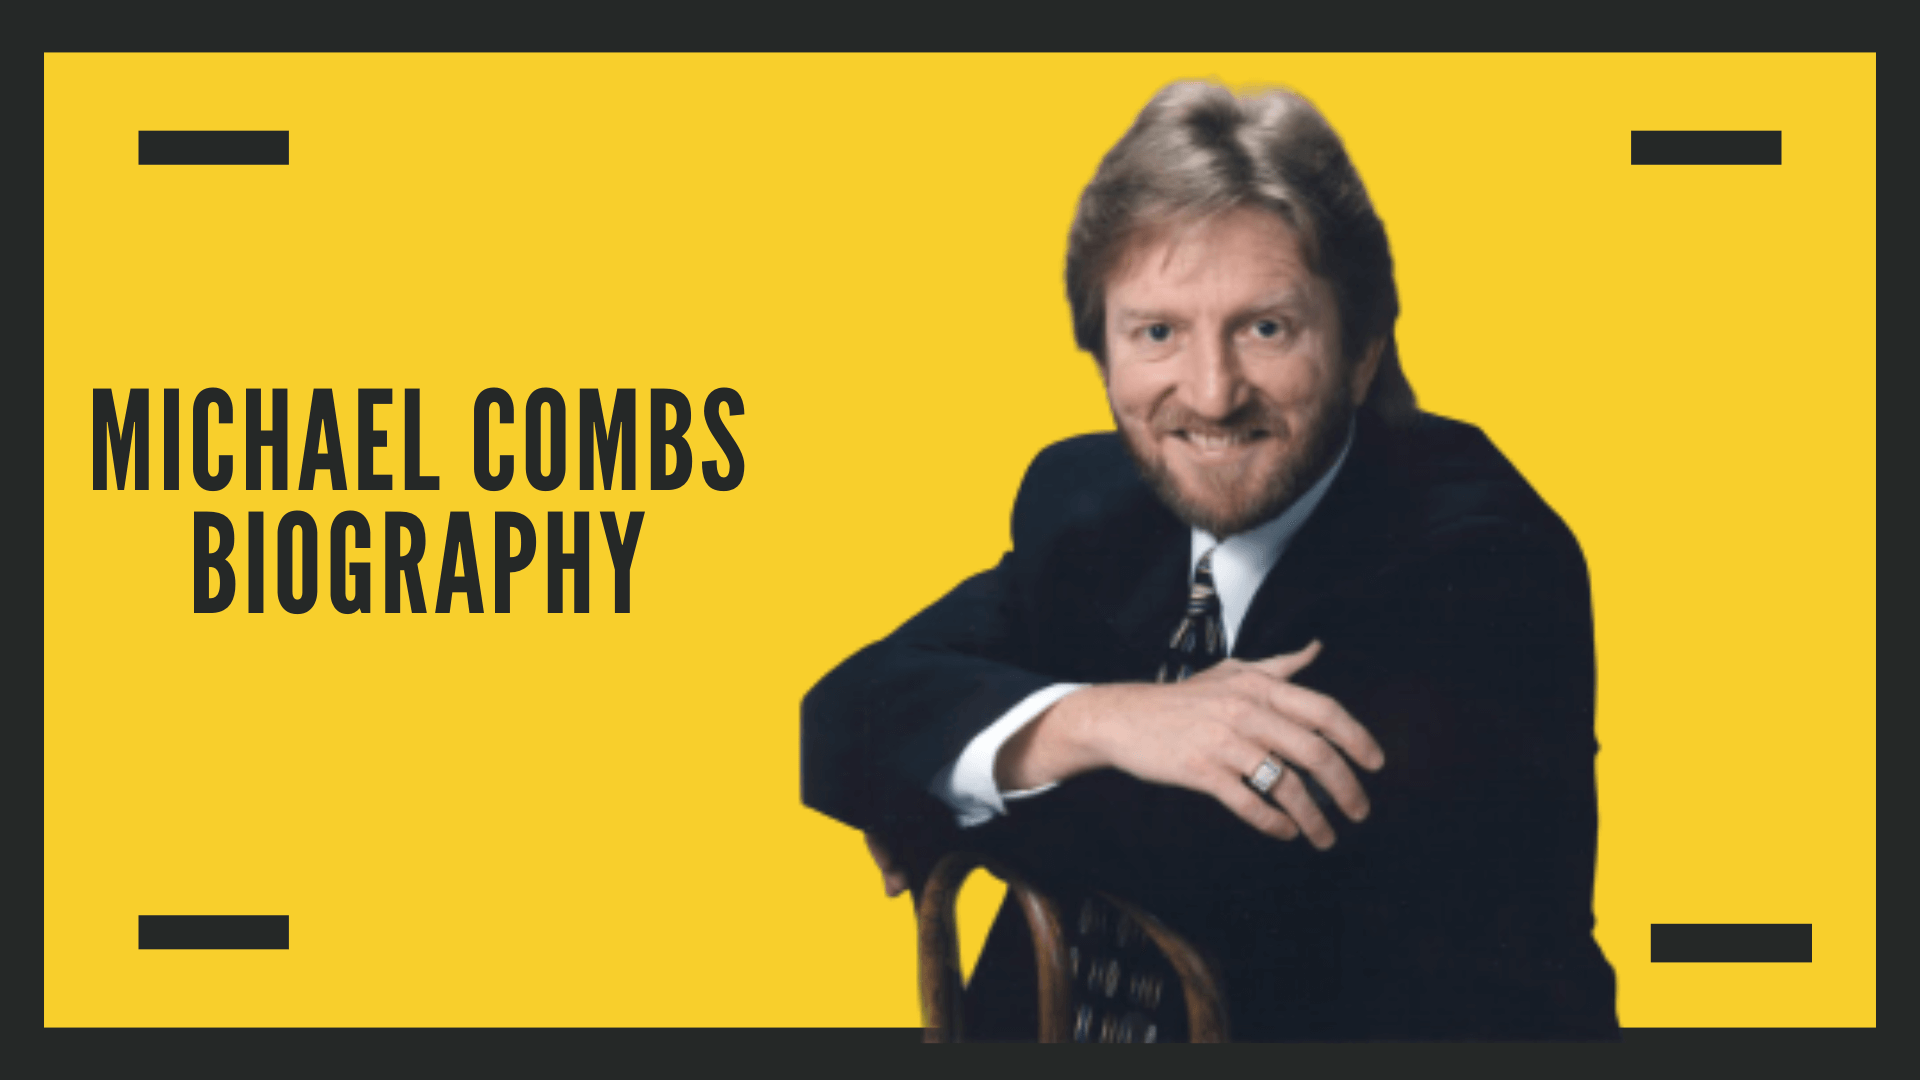 Michael Combs biography